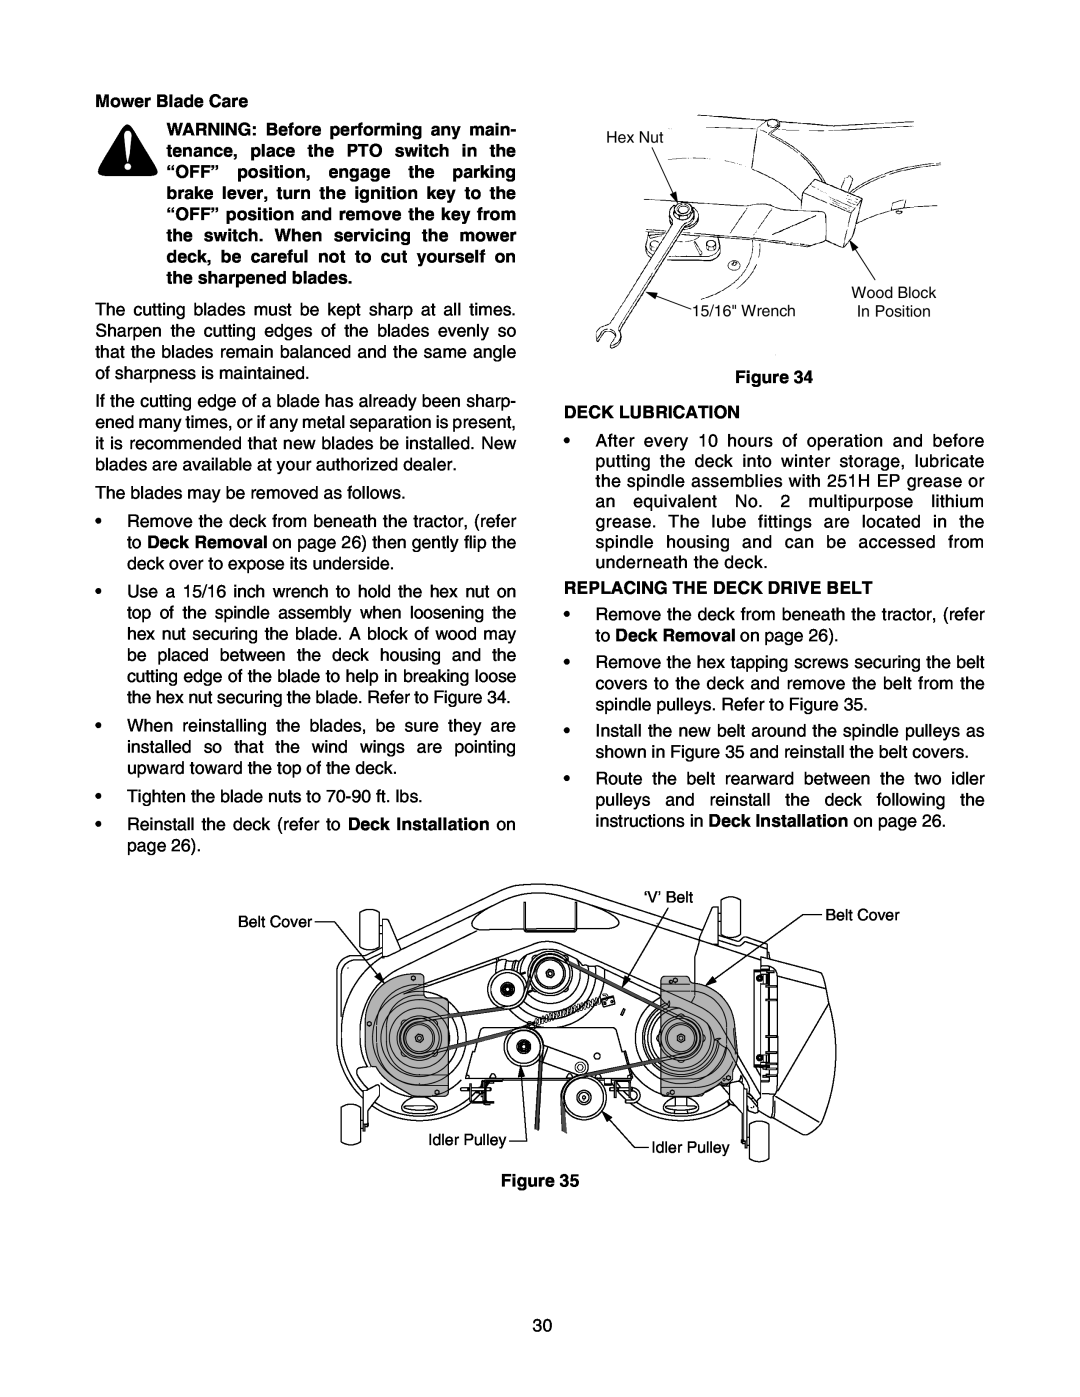 Cub Cadet RZT 50 manual Mower Blade Care, Deck Lubrication, Replacing The Deck Drive Belt 